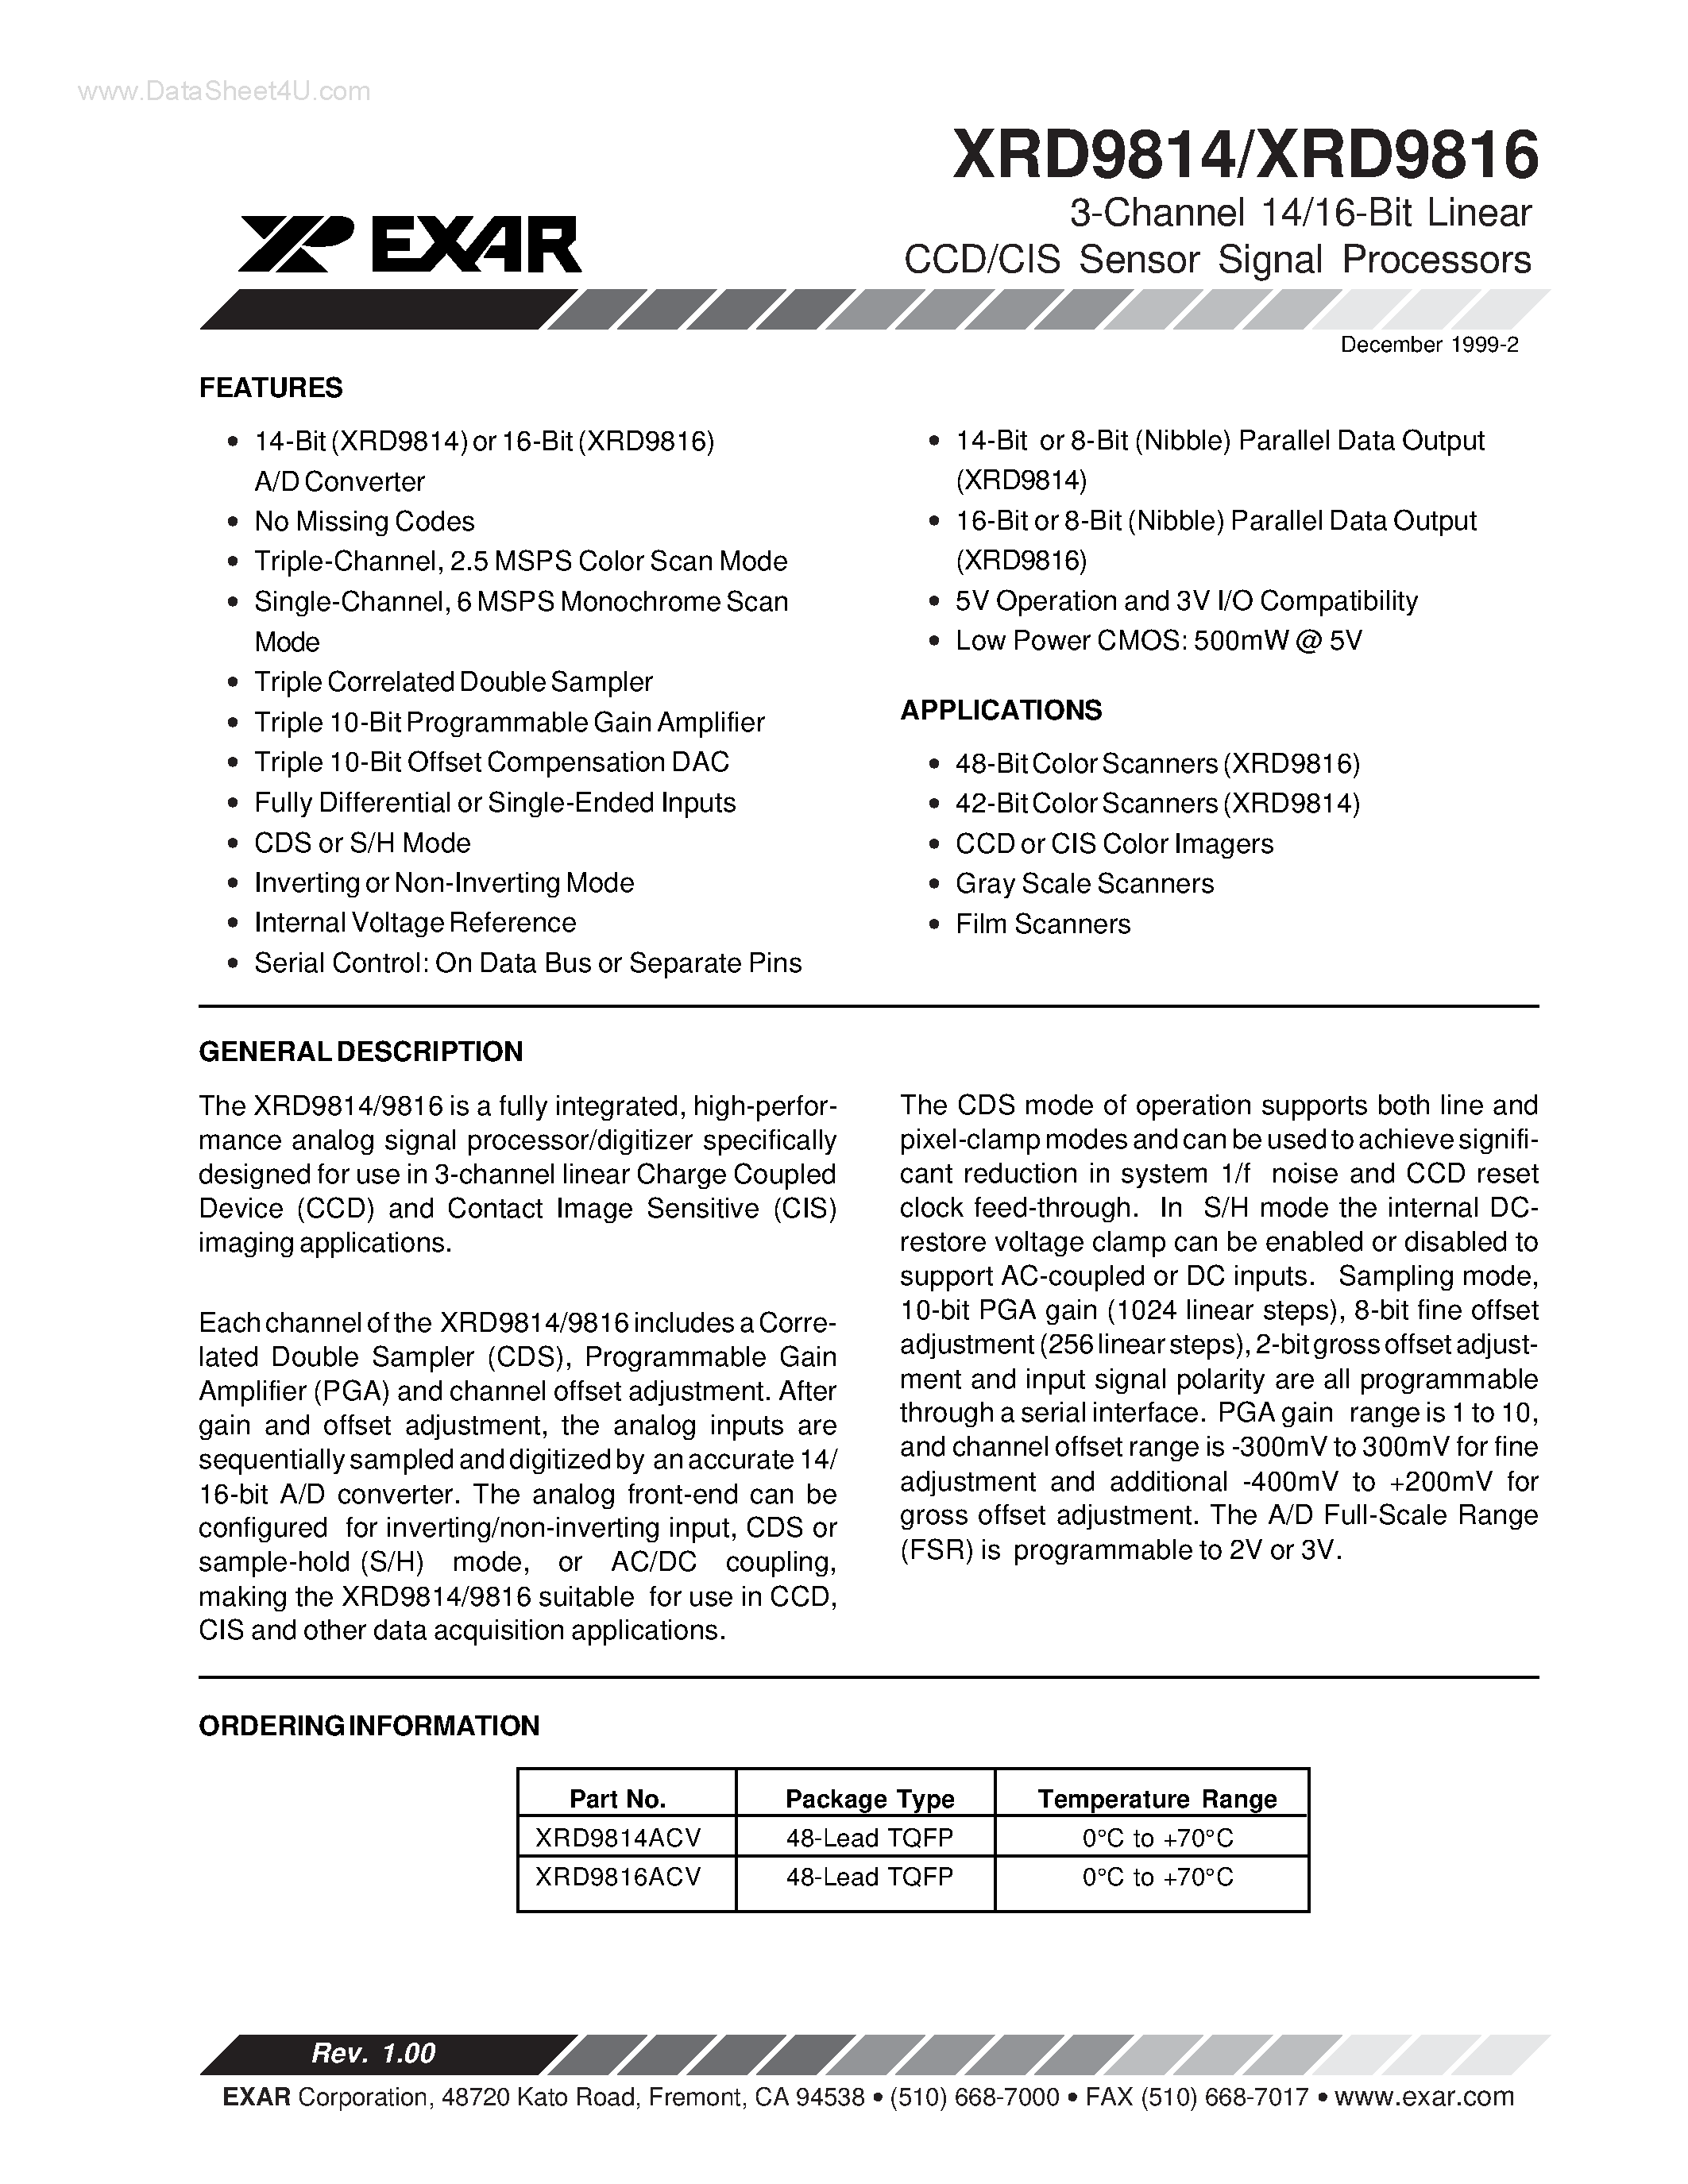 Даташит XRD9814 - (XRD9814 / XRD9816) 3-Channel 14/16-Bit Linear CCD/CIS Sensor Signal Processors страница 1